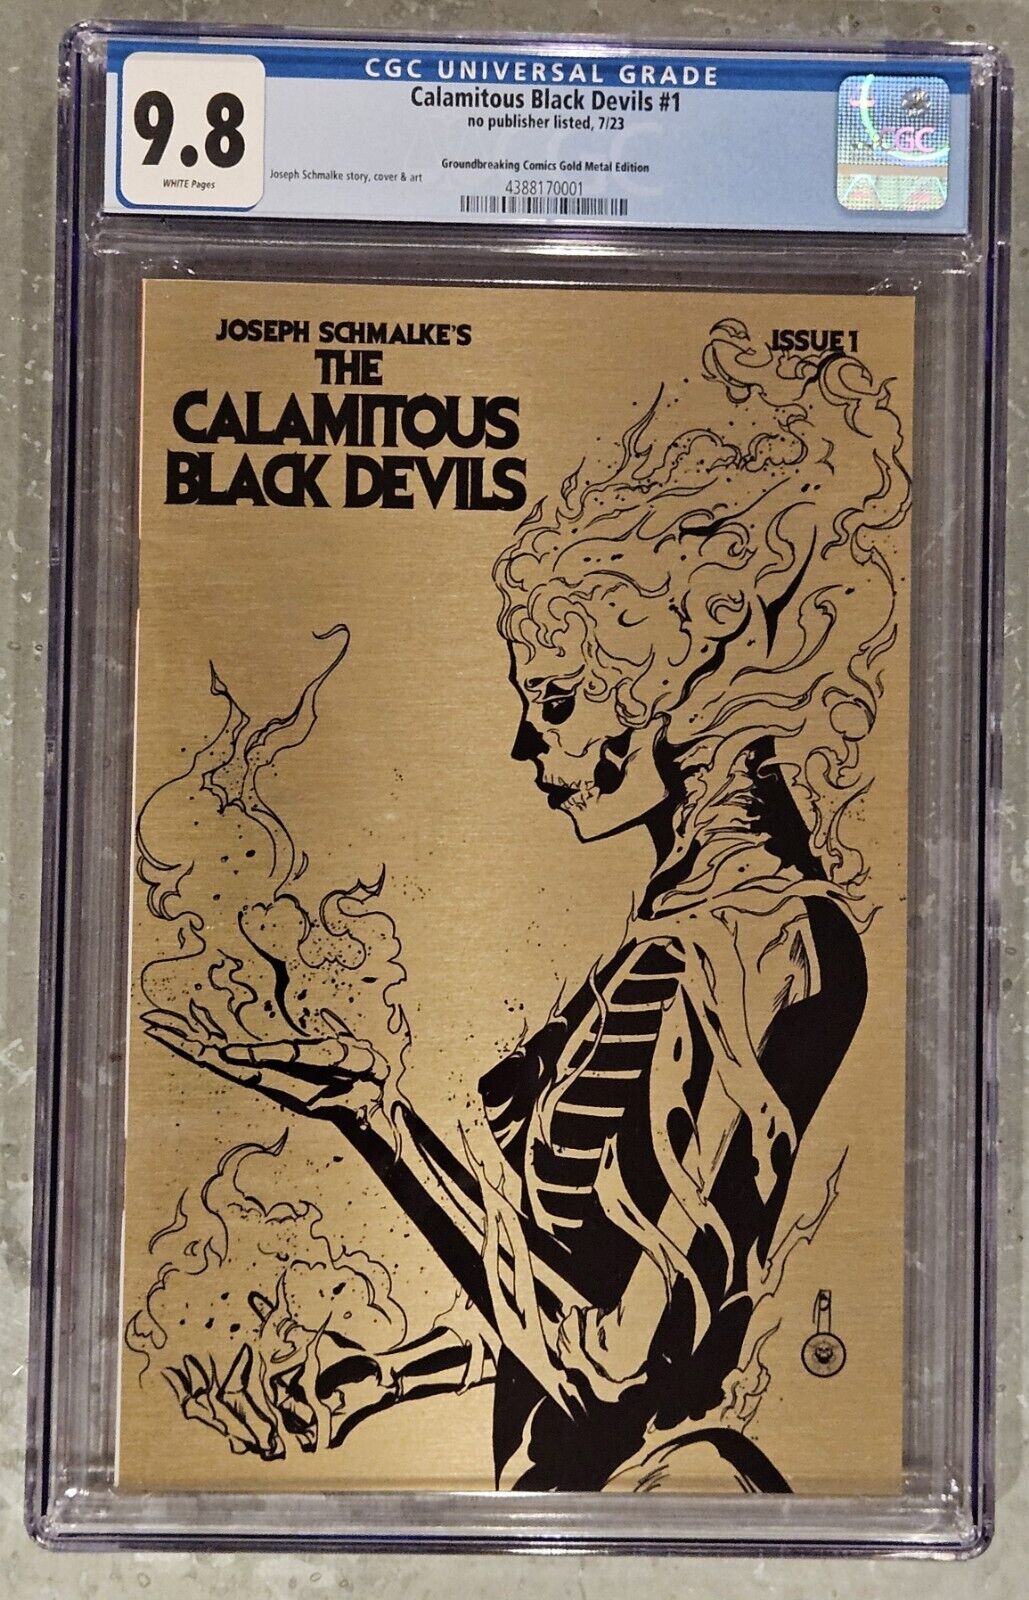 💀🔥 CALAMITOUS BLACK DEVILS #1 Joseph Schmalke GOLD METAL Variant /10